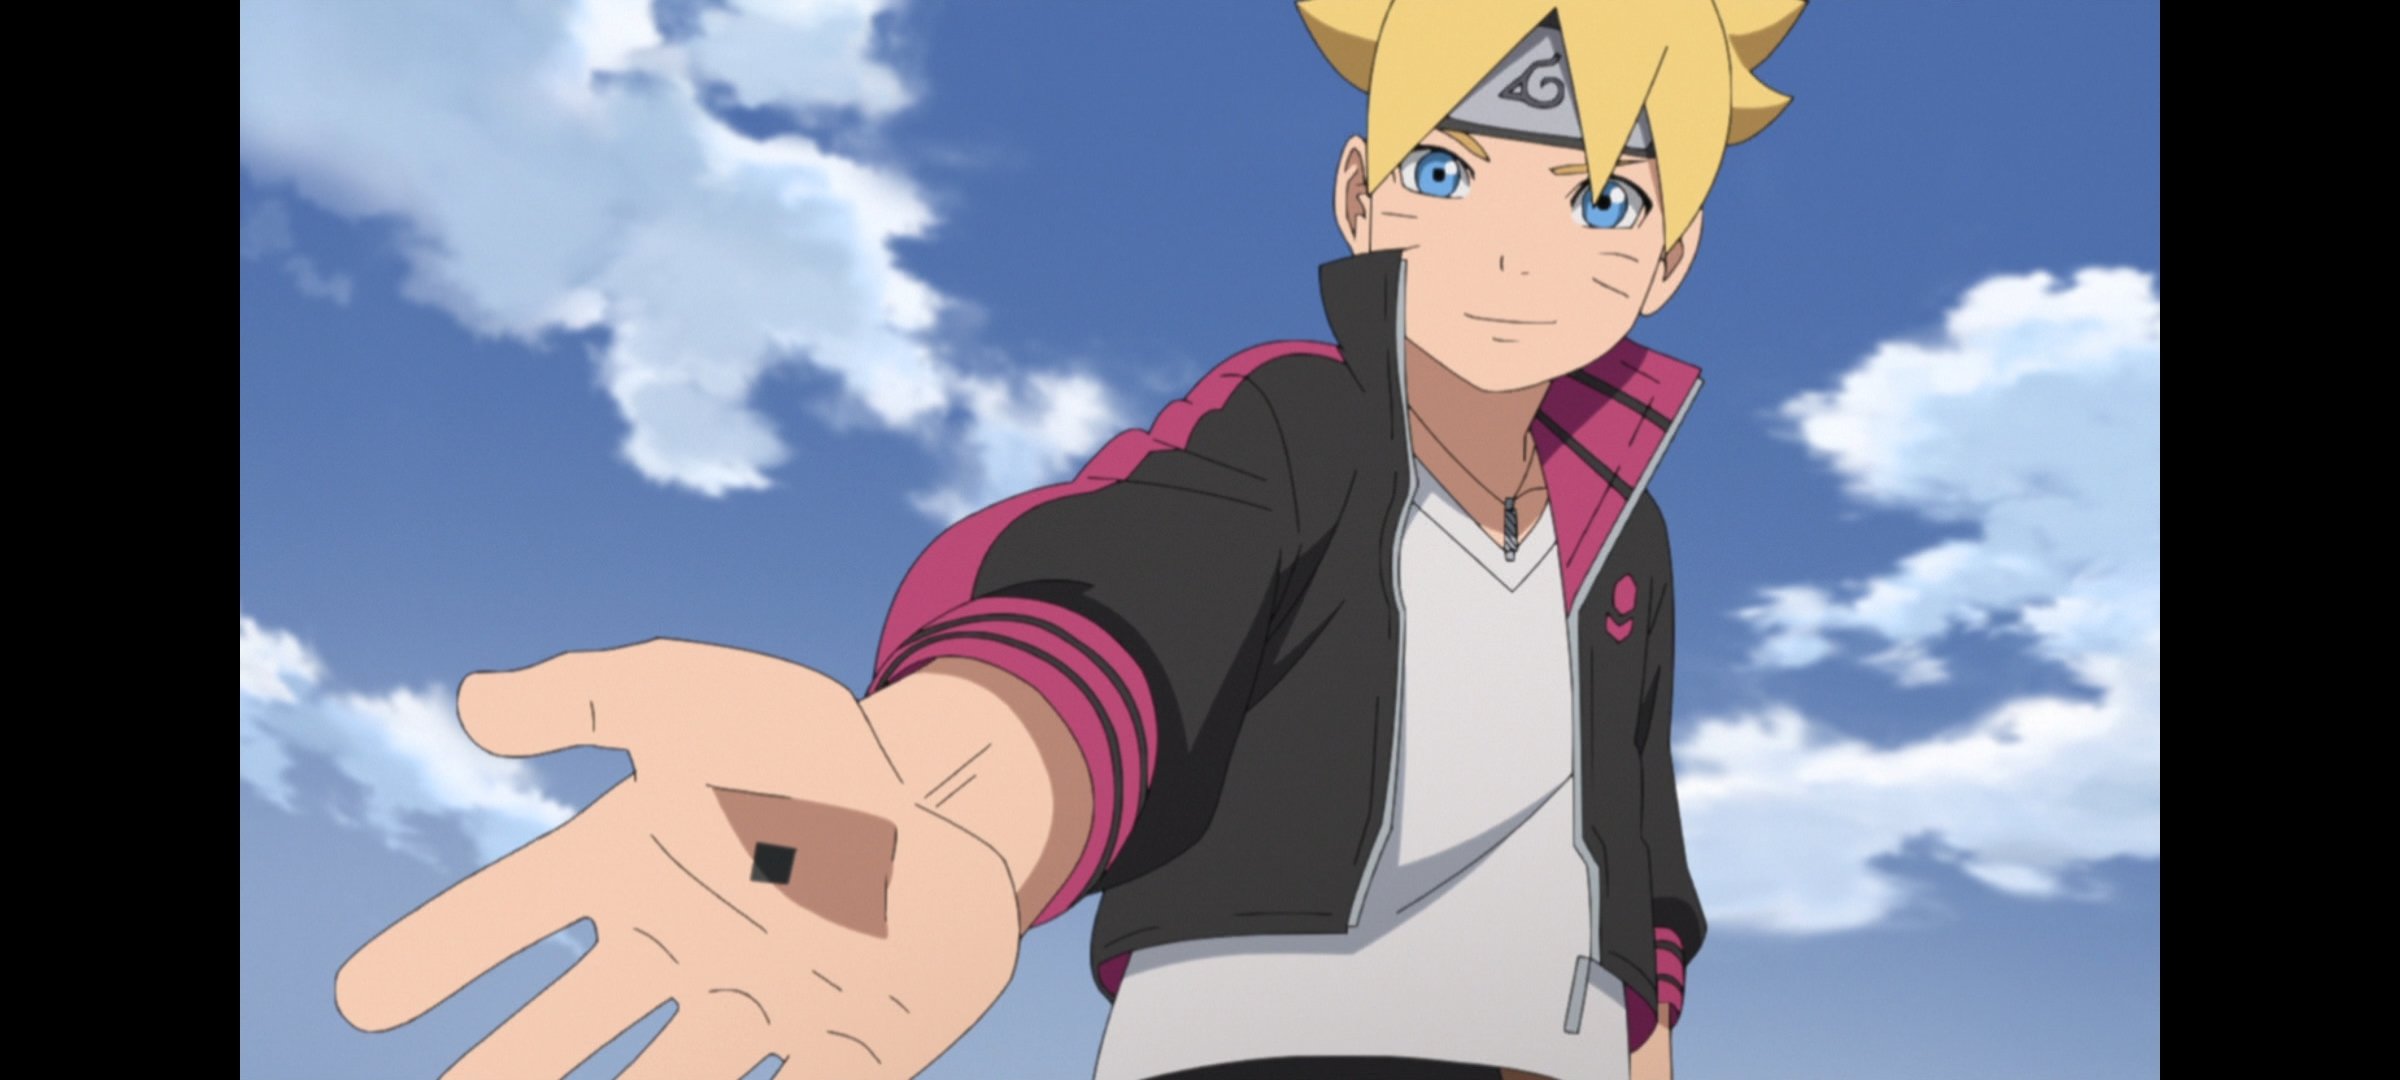 Boruto: Naruto Next Generations Episode 288: Release Date